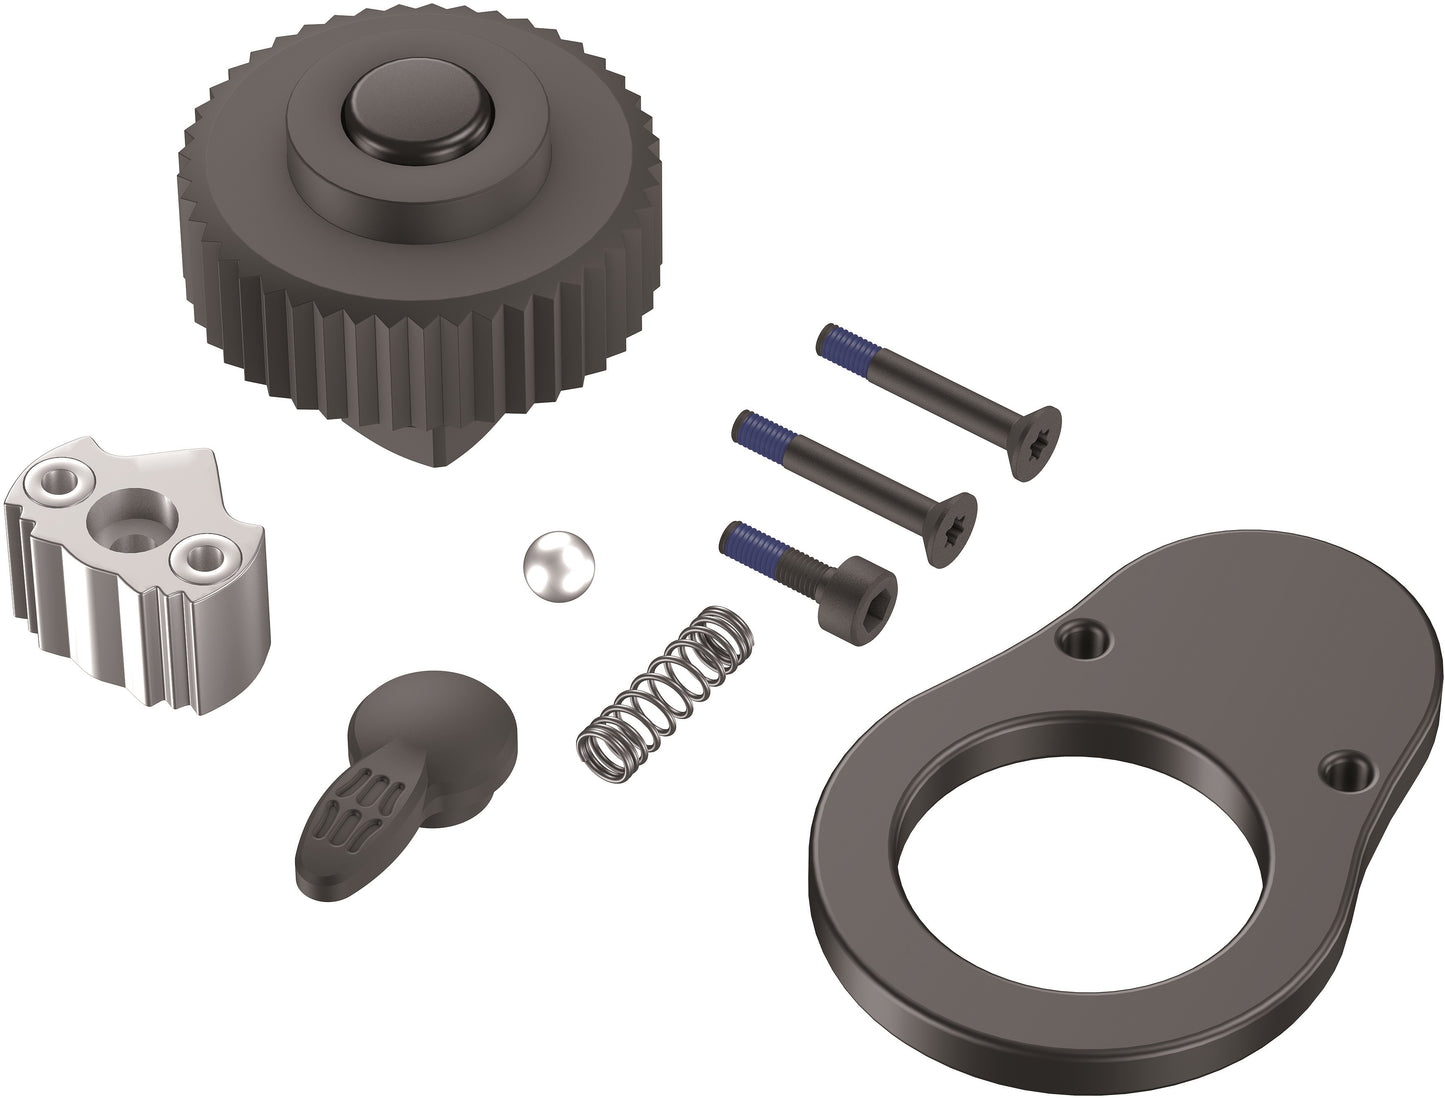 wera 9904 b 2 click torque ratchet wrench repair kit 3/8" 05547628001